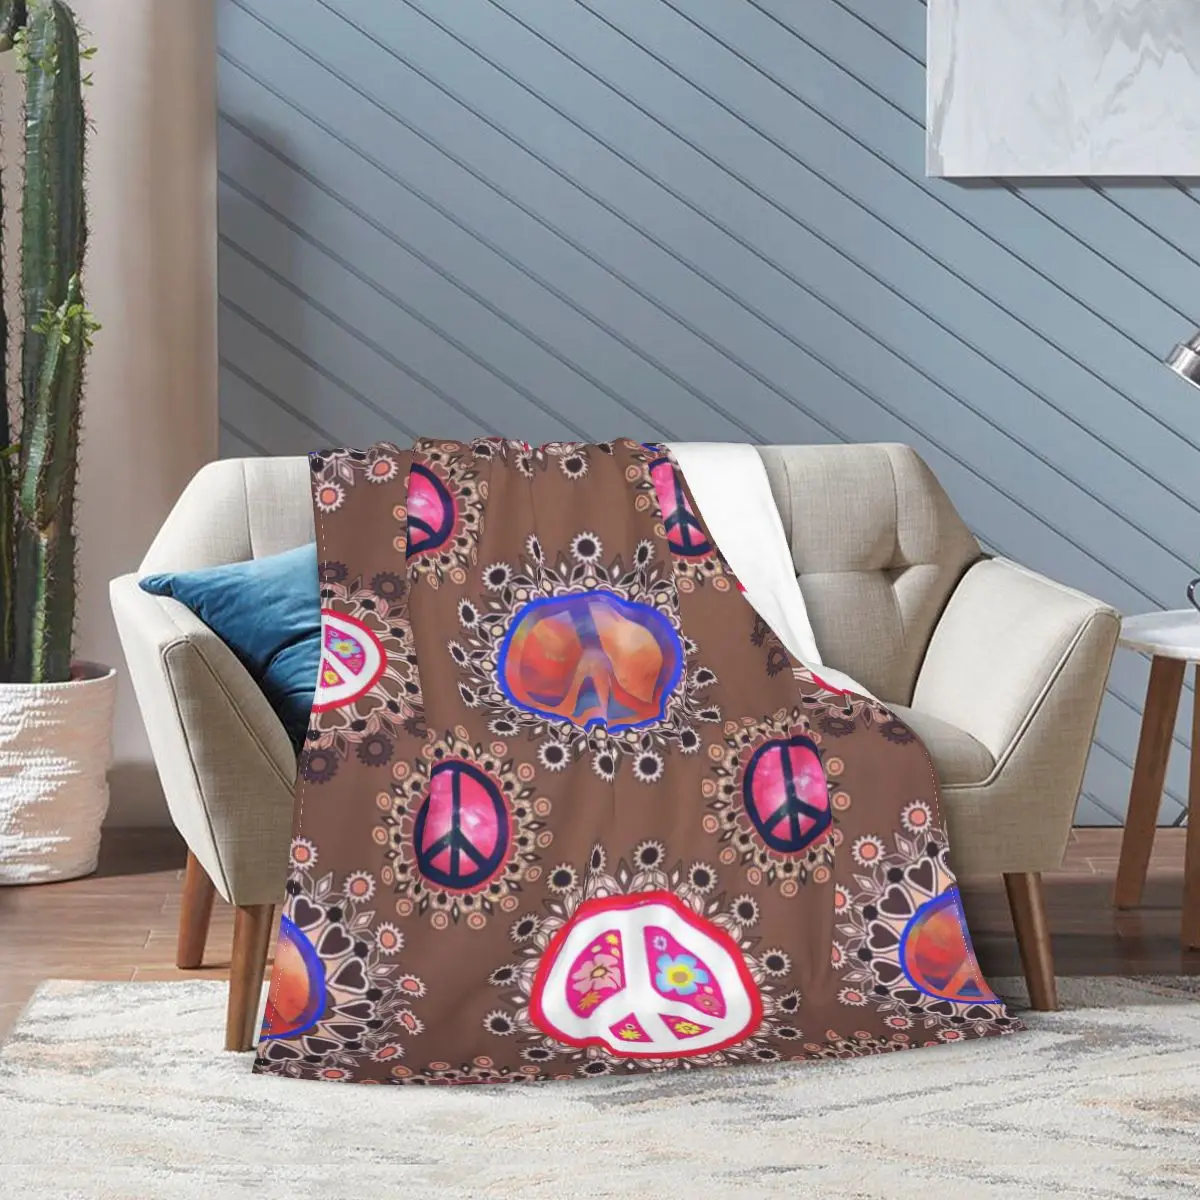 

Hippie Style Peace Signs Flannel Fleece Blanket For Kids Teens Adults Soft Cozy Warm Fuzzy